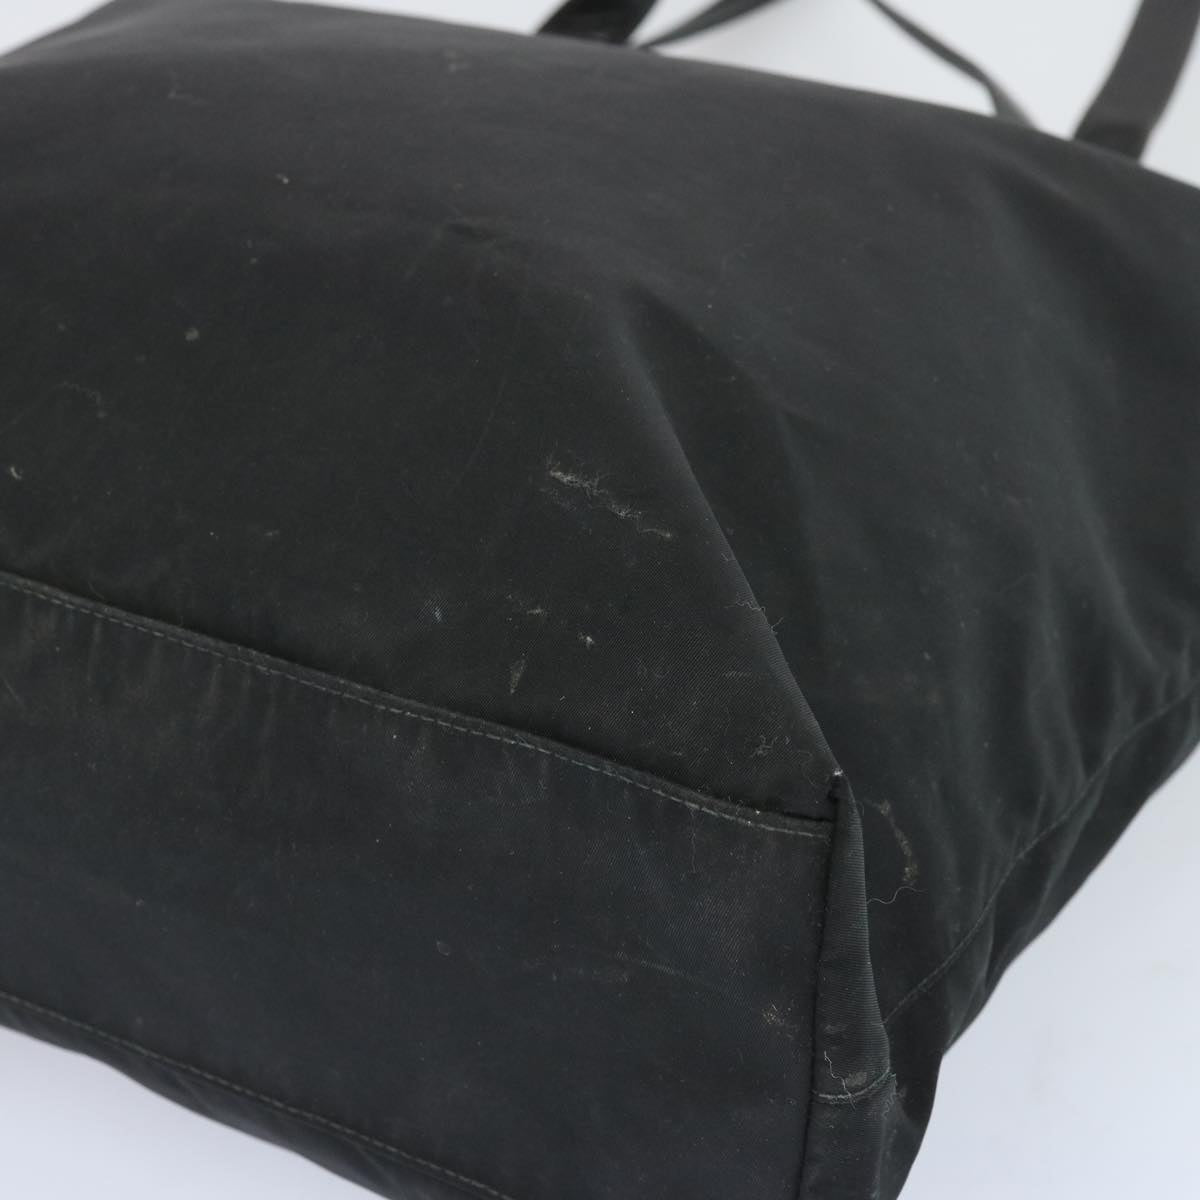 PRADA Tote Bag Nylon Black Auth 66385